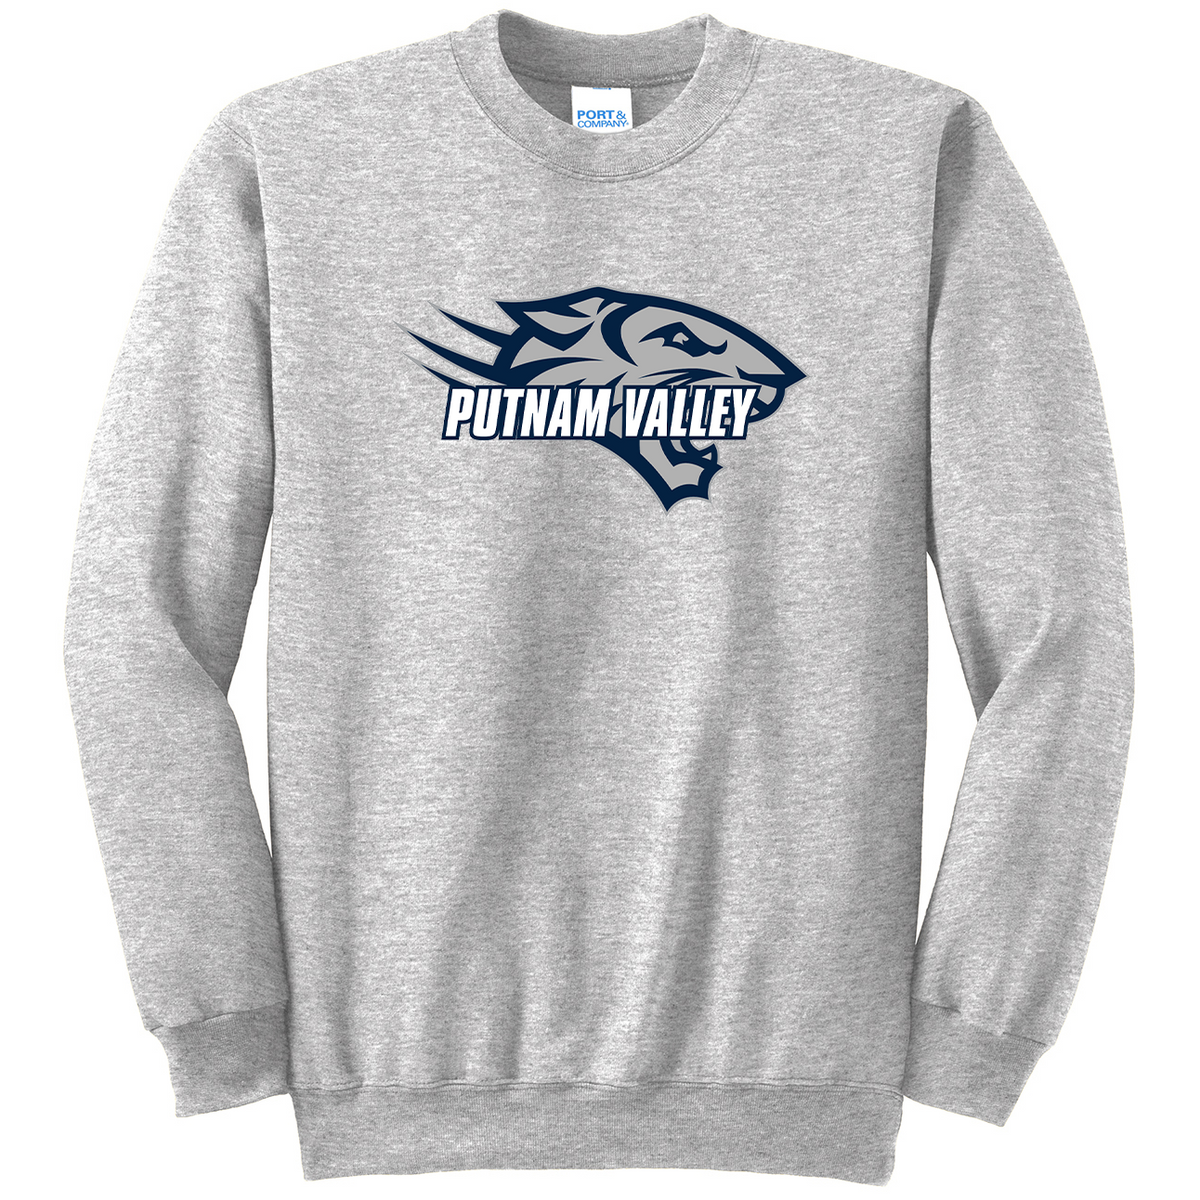 Putnam Valley Baseball Crew Neck Sweater